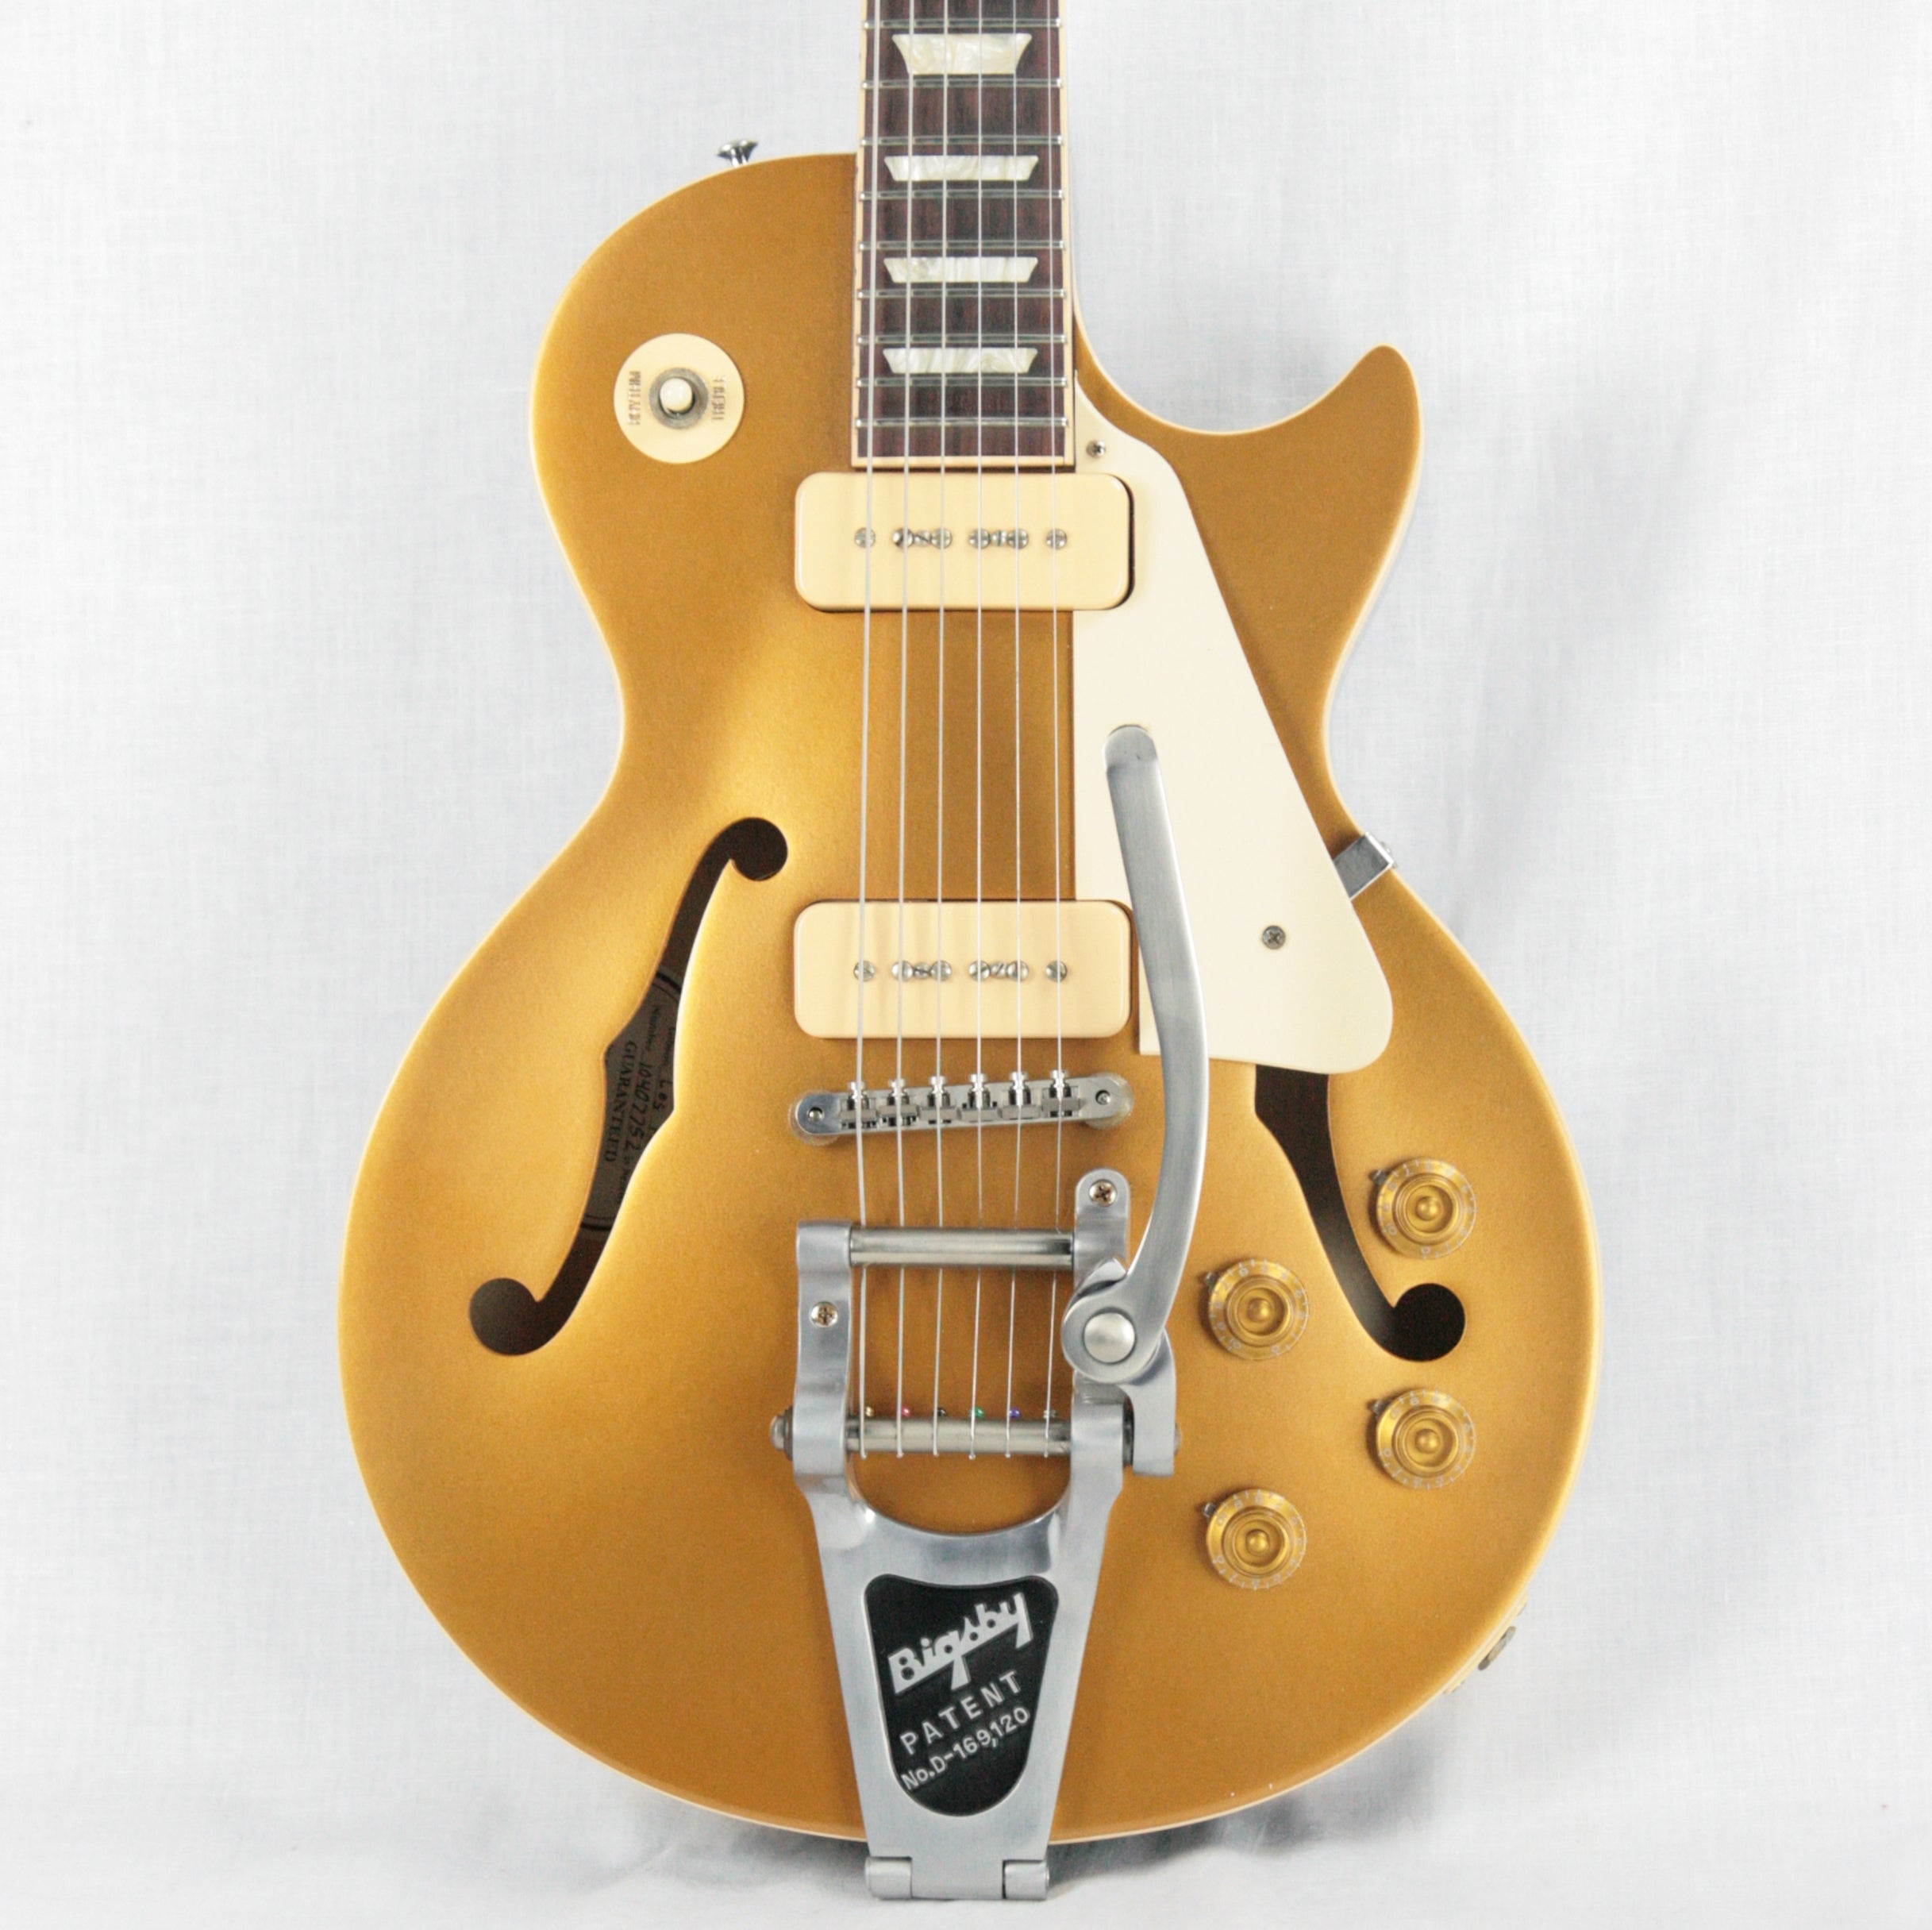 *SOLD*  2017 Gibson ES Les Paul Goldtop w/ Bigsby & P90 Pickups! 335 LP Gold Top!